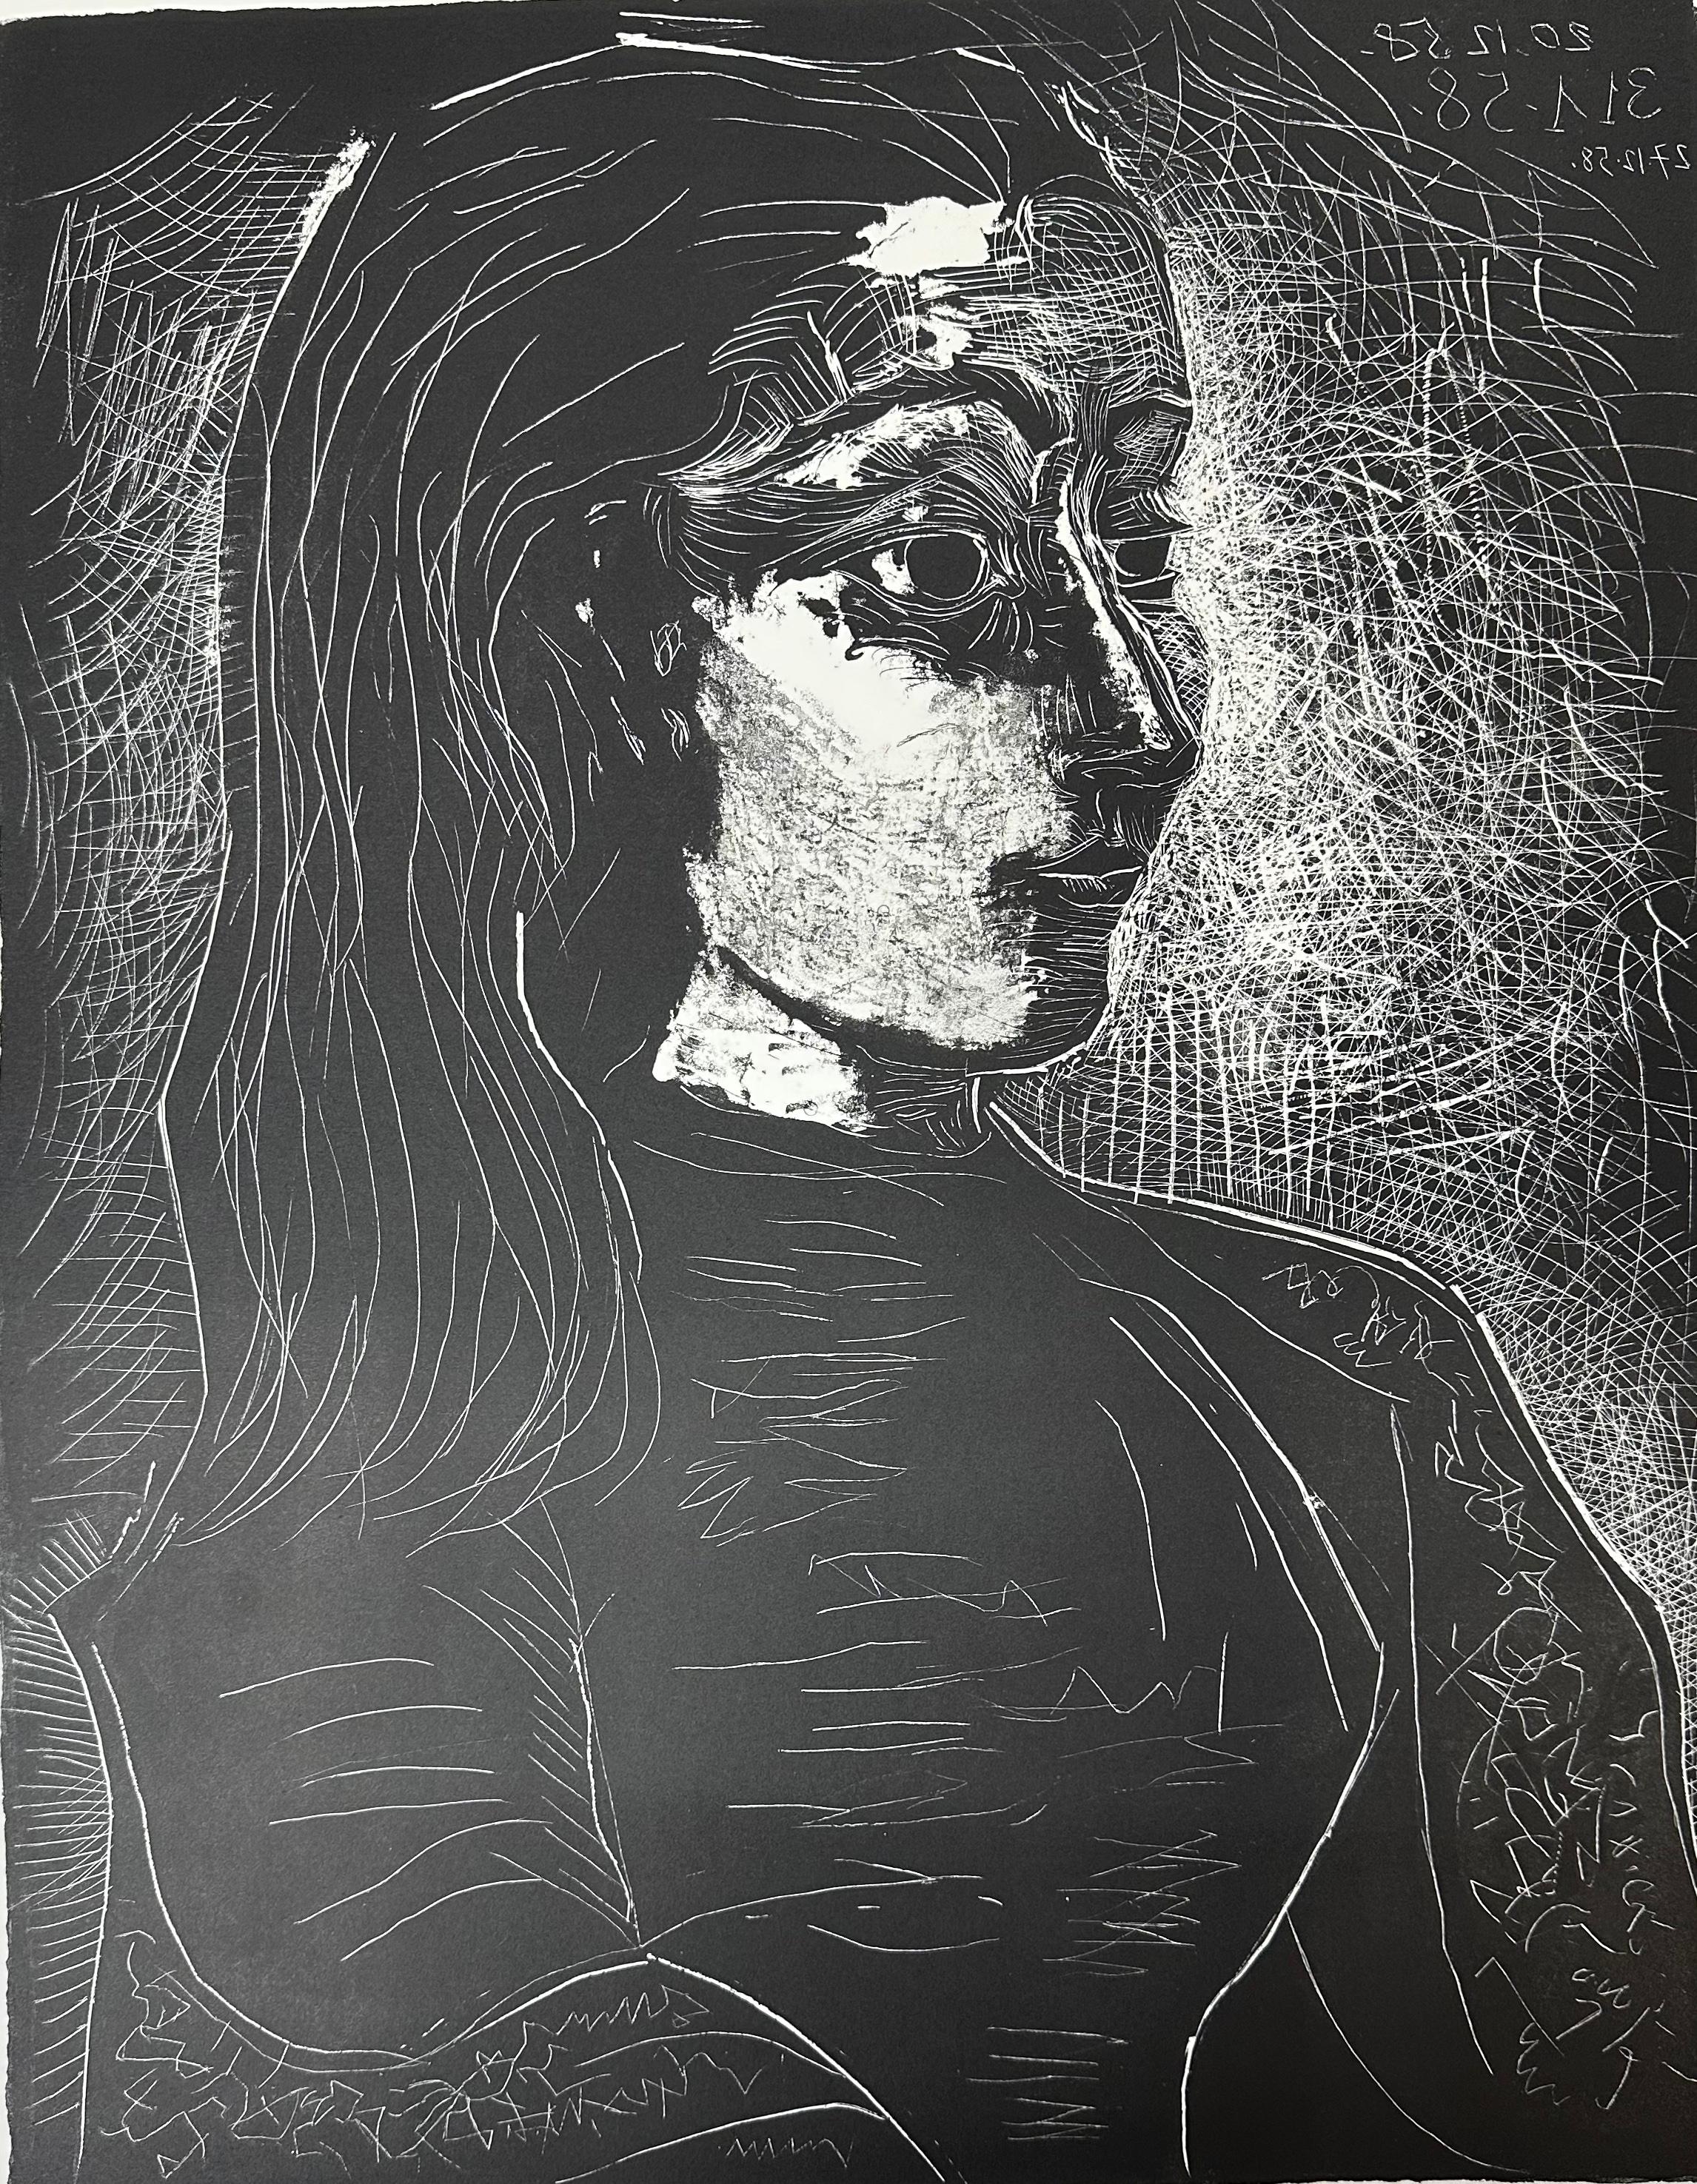 Pablo Picasso, "Portrait of Jacqueline, Right Profile, " original lithograph